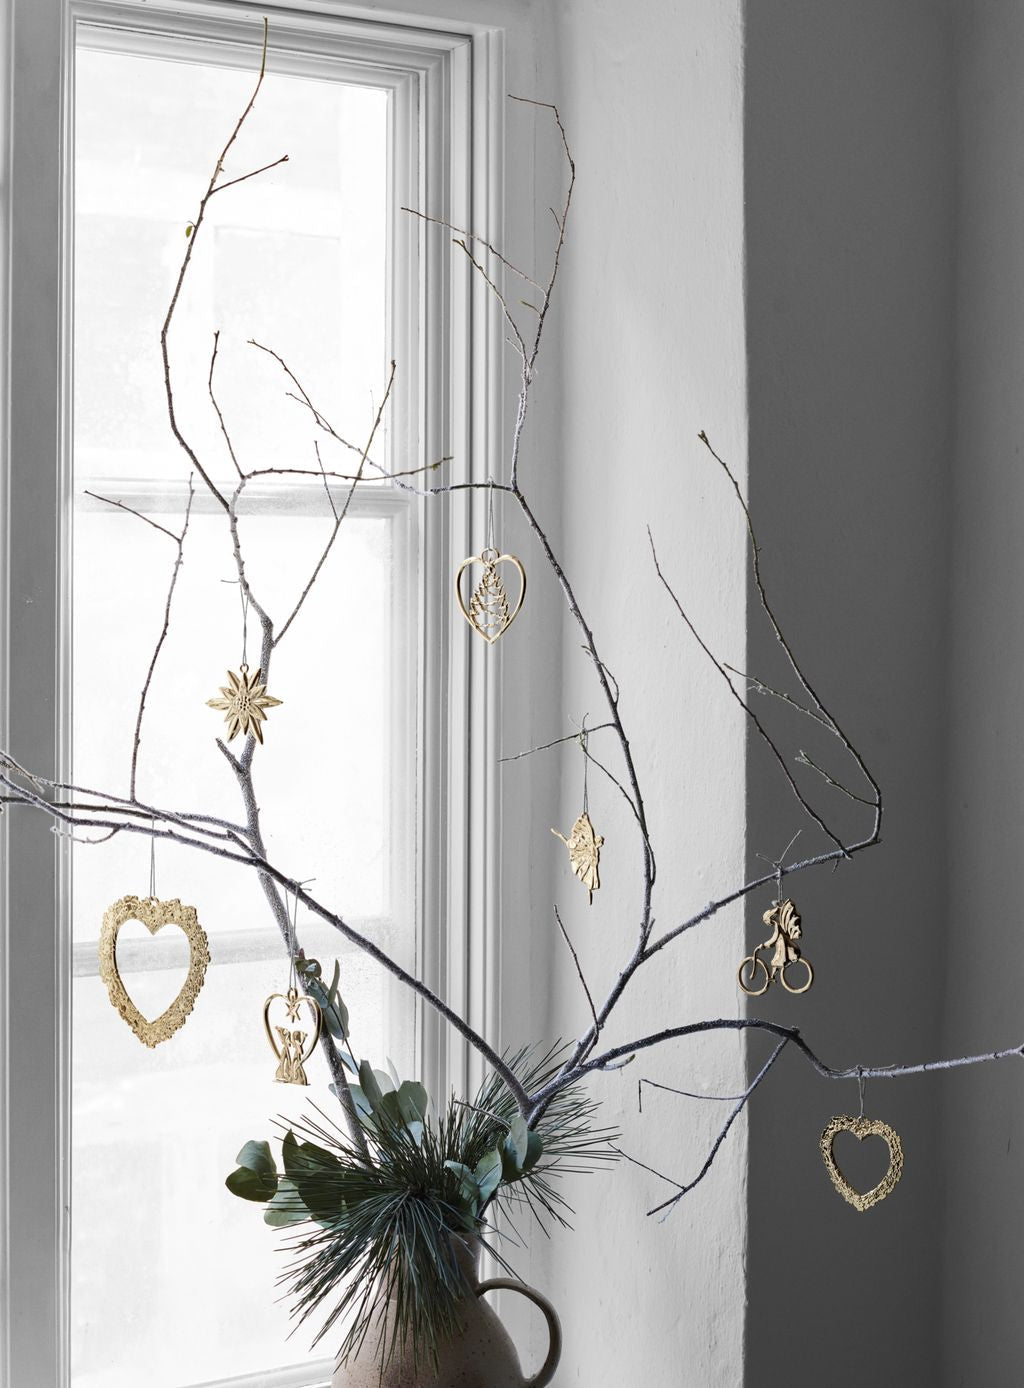 Rosendahl Karen Blixen Heart Christmas Tree H7,5 cm, Gold Plated